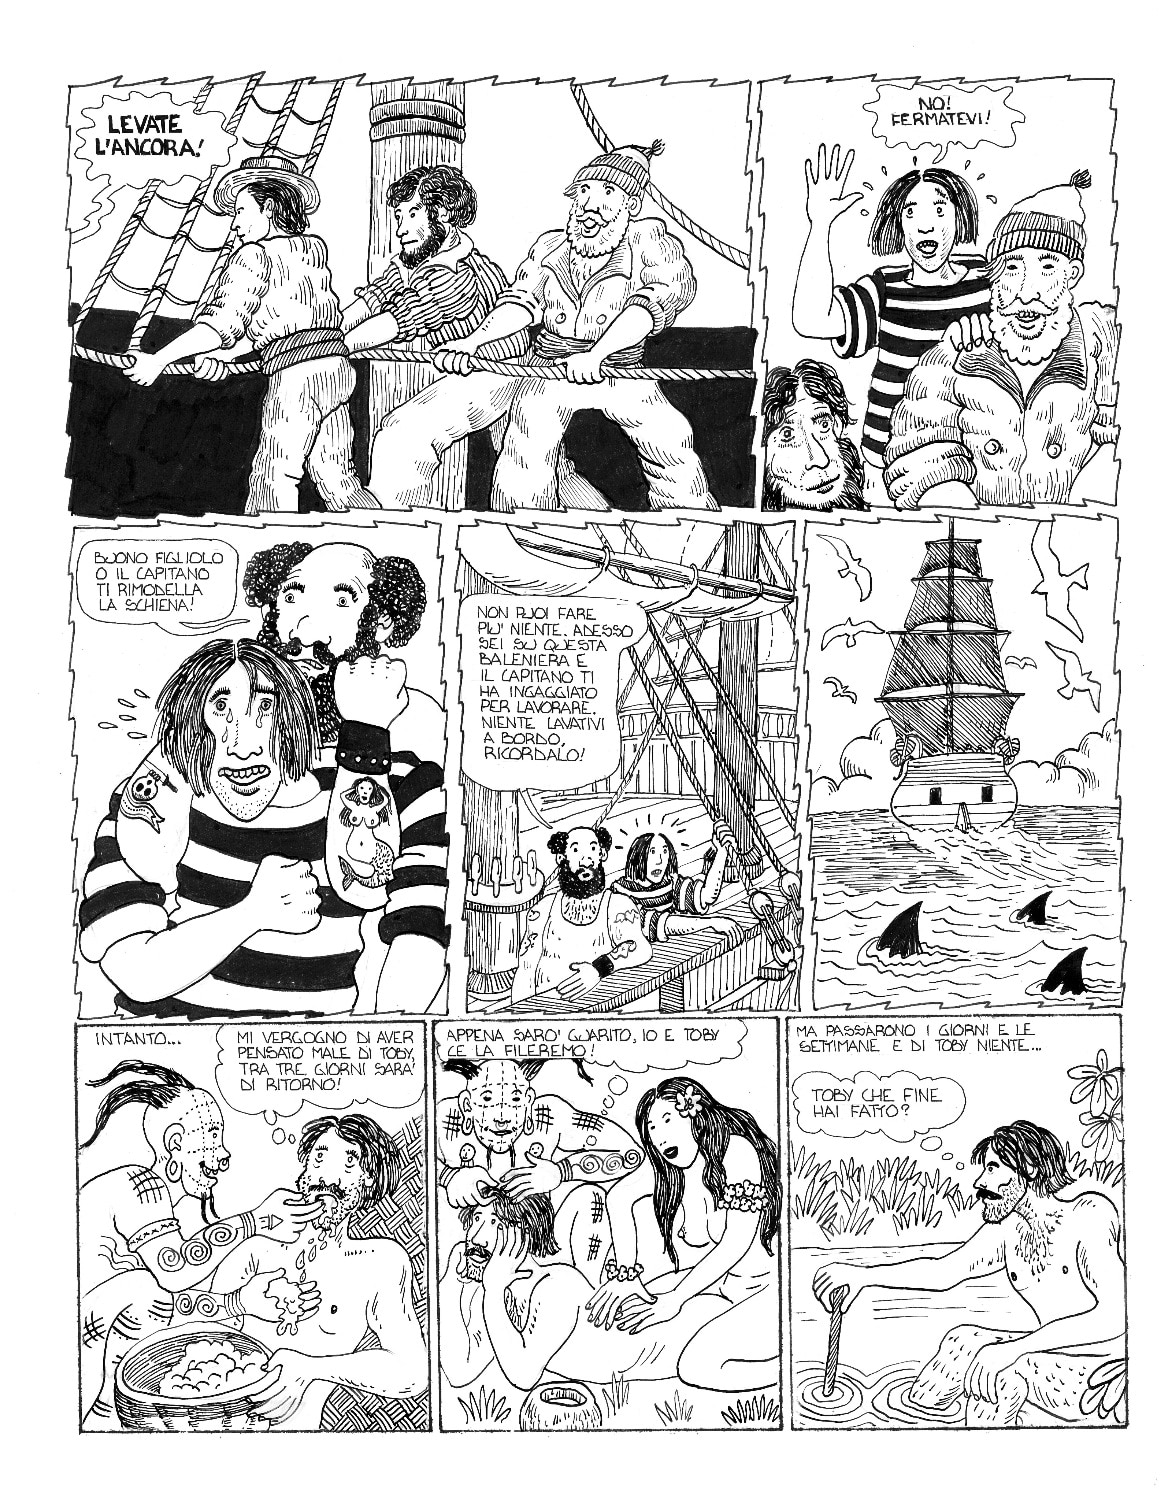 "Taipi", di Herman Melville e Matteo Guarnaccia (ComicOut)